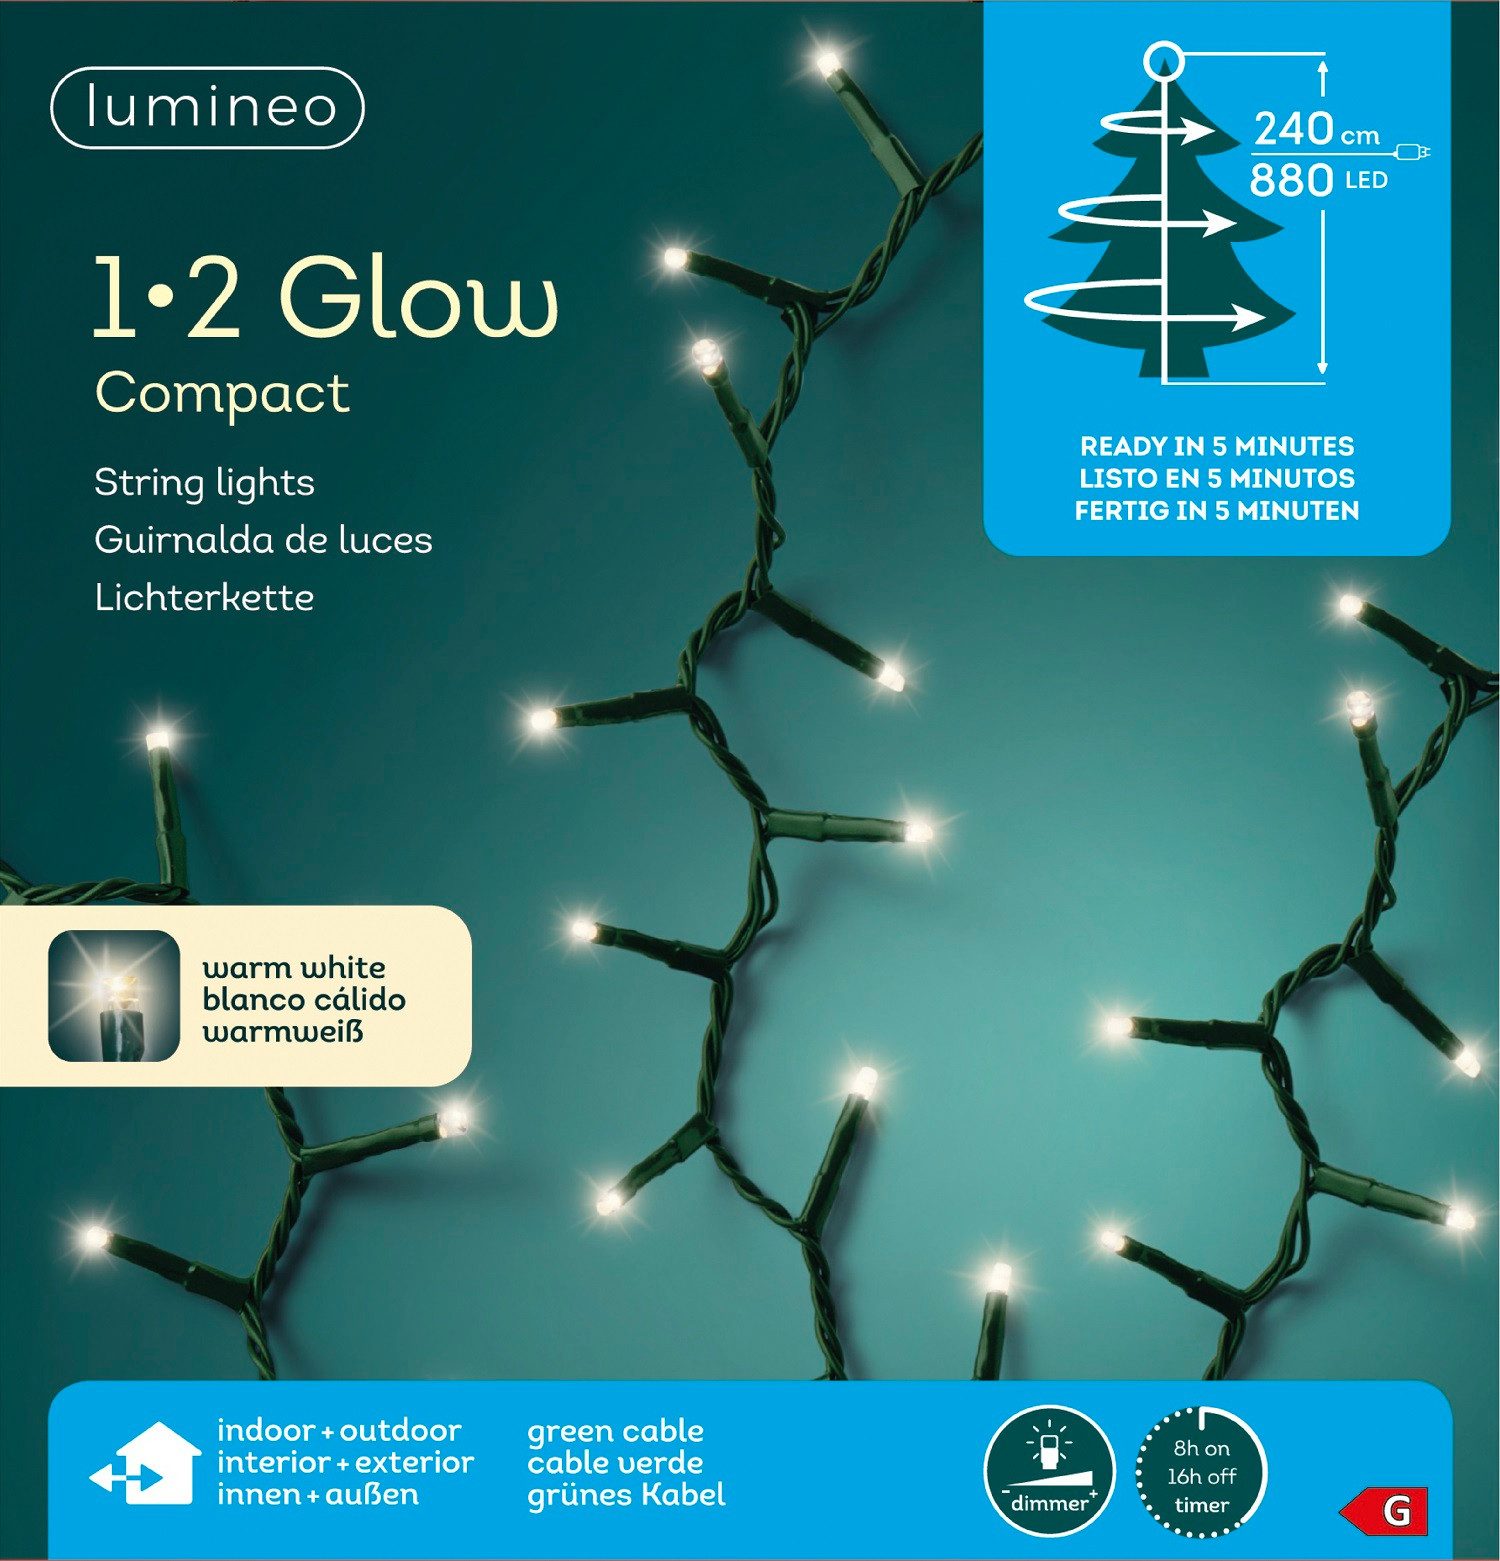 Lumineo LED-Lichterkette Lumineo Lichterkette 1-2 Glow Compact 880 LED 2,4 m warm weiß, Timer, Dimmbar, Timer, Indoor, Outdoor, IP44-Schutz